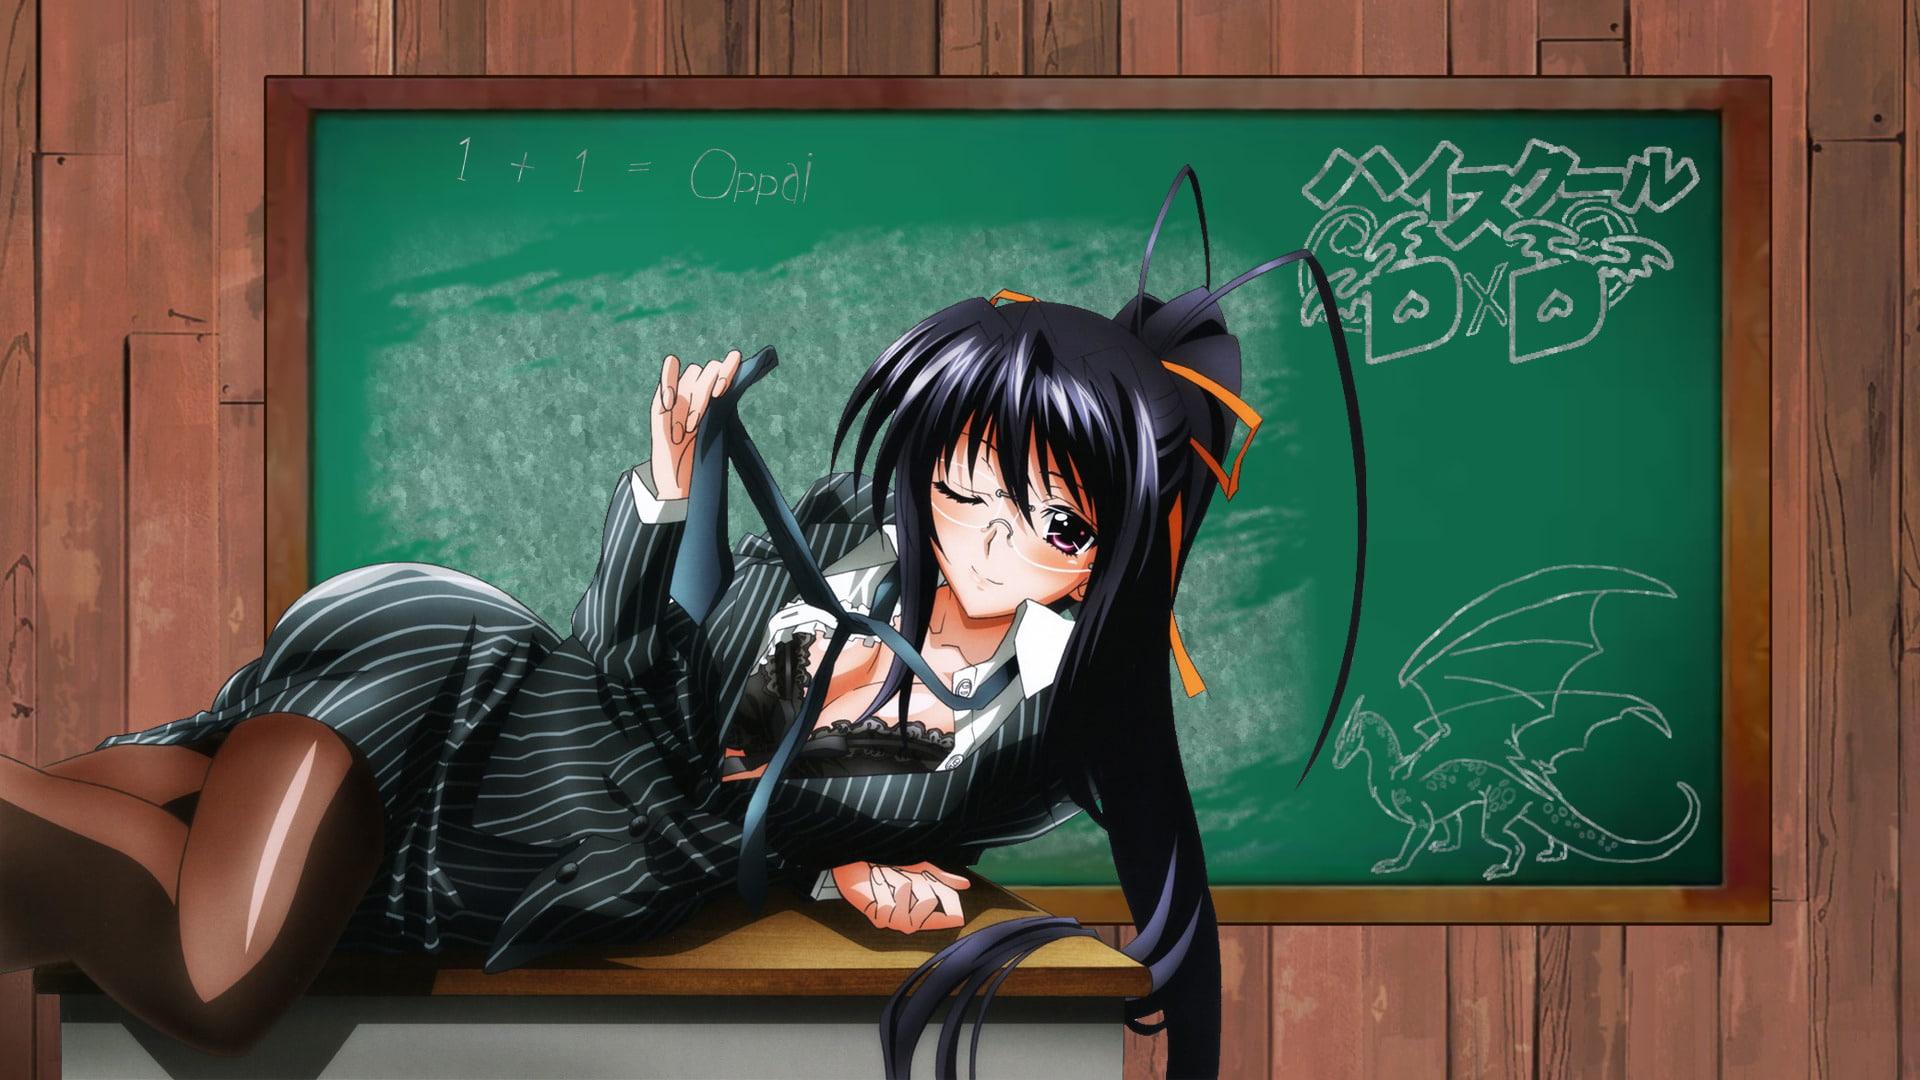 HD wallpaper: Anime Girls, Highschool DxD, Himejima Akeno